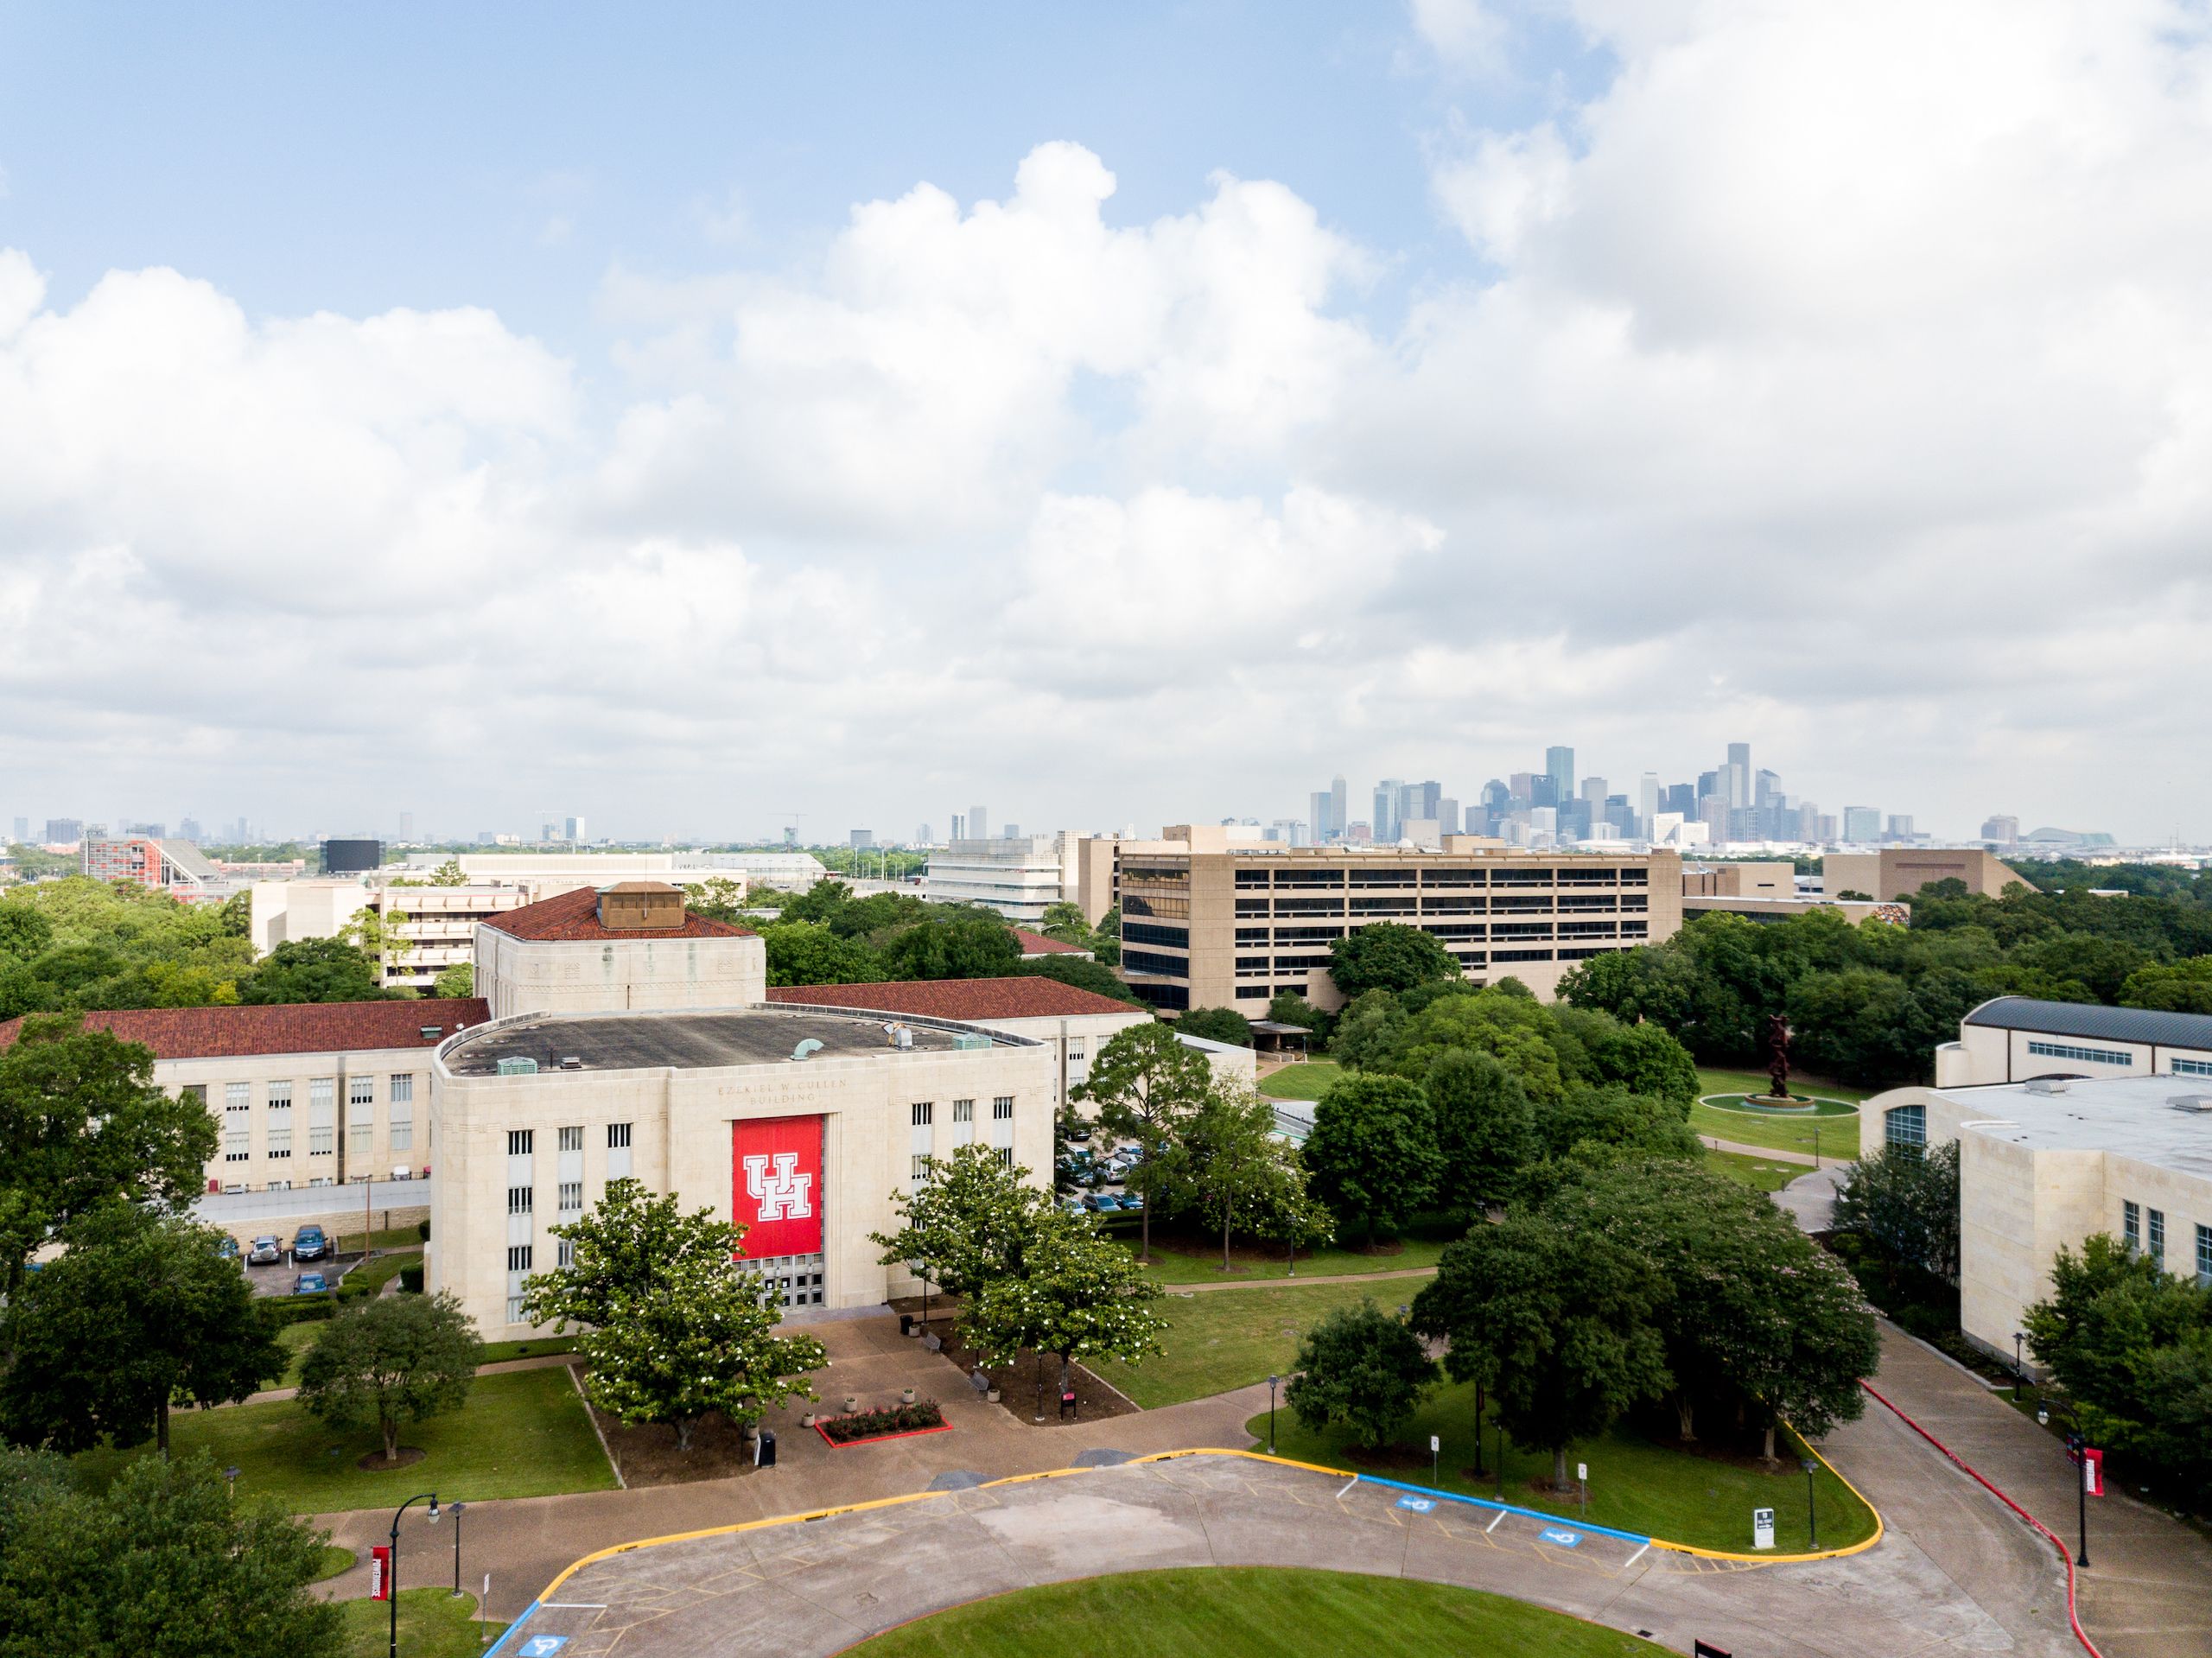 University of Houston and Houston skyline